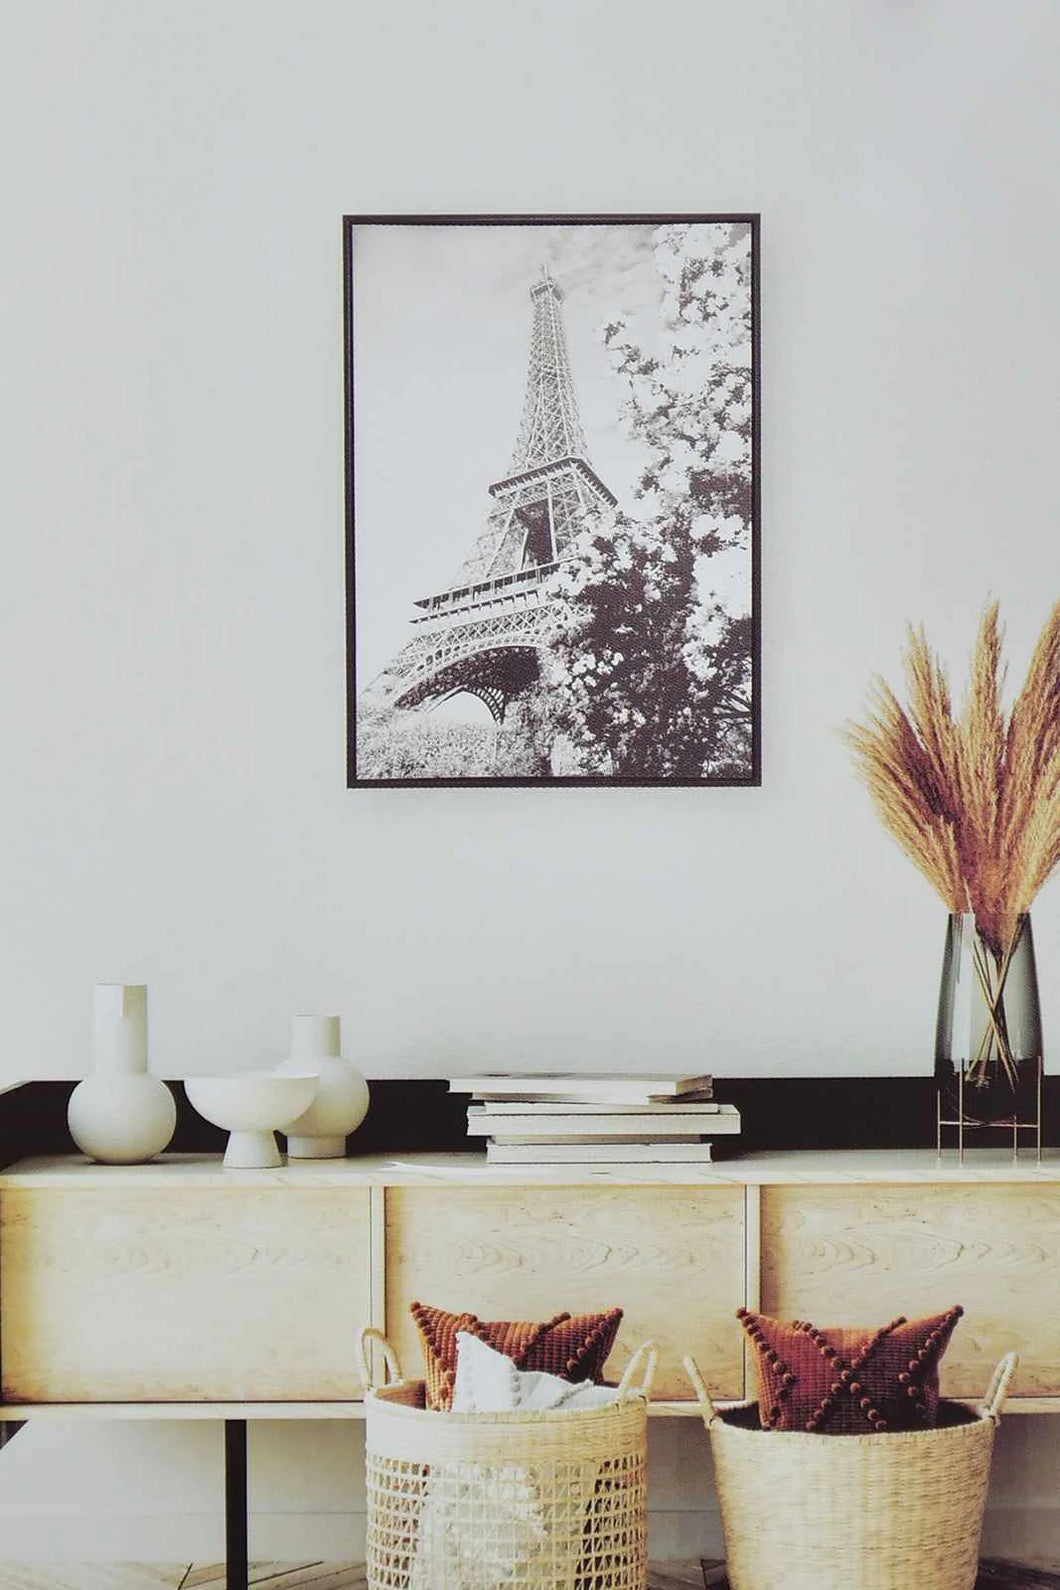 Black Eiffel Tower Scenery with Floating Wall Frame إطار أسود بصورة كاملة لبرج إيفل